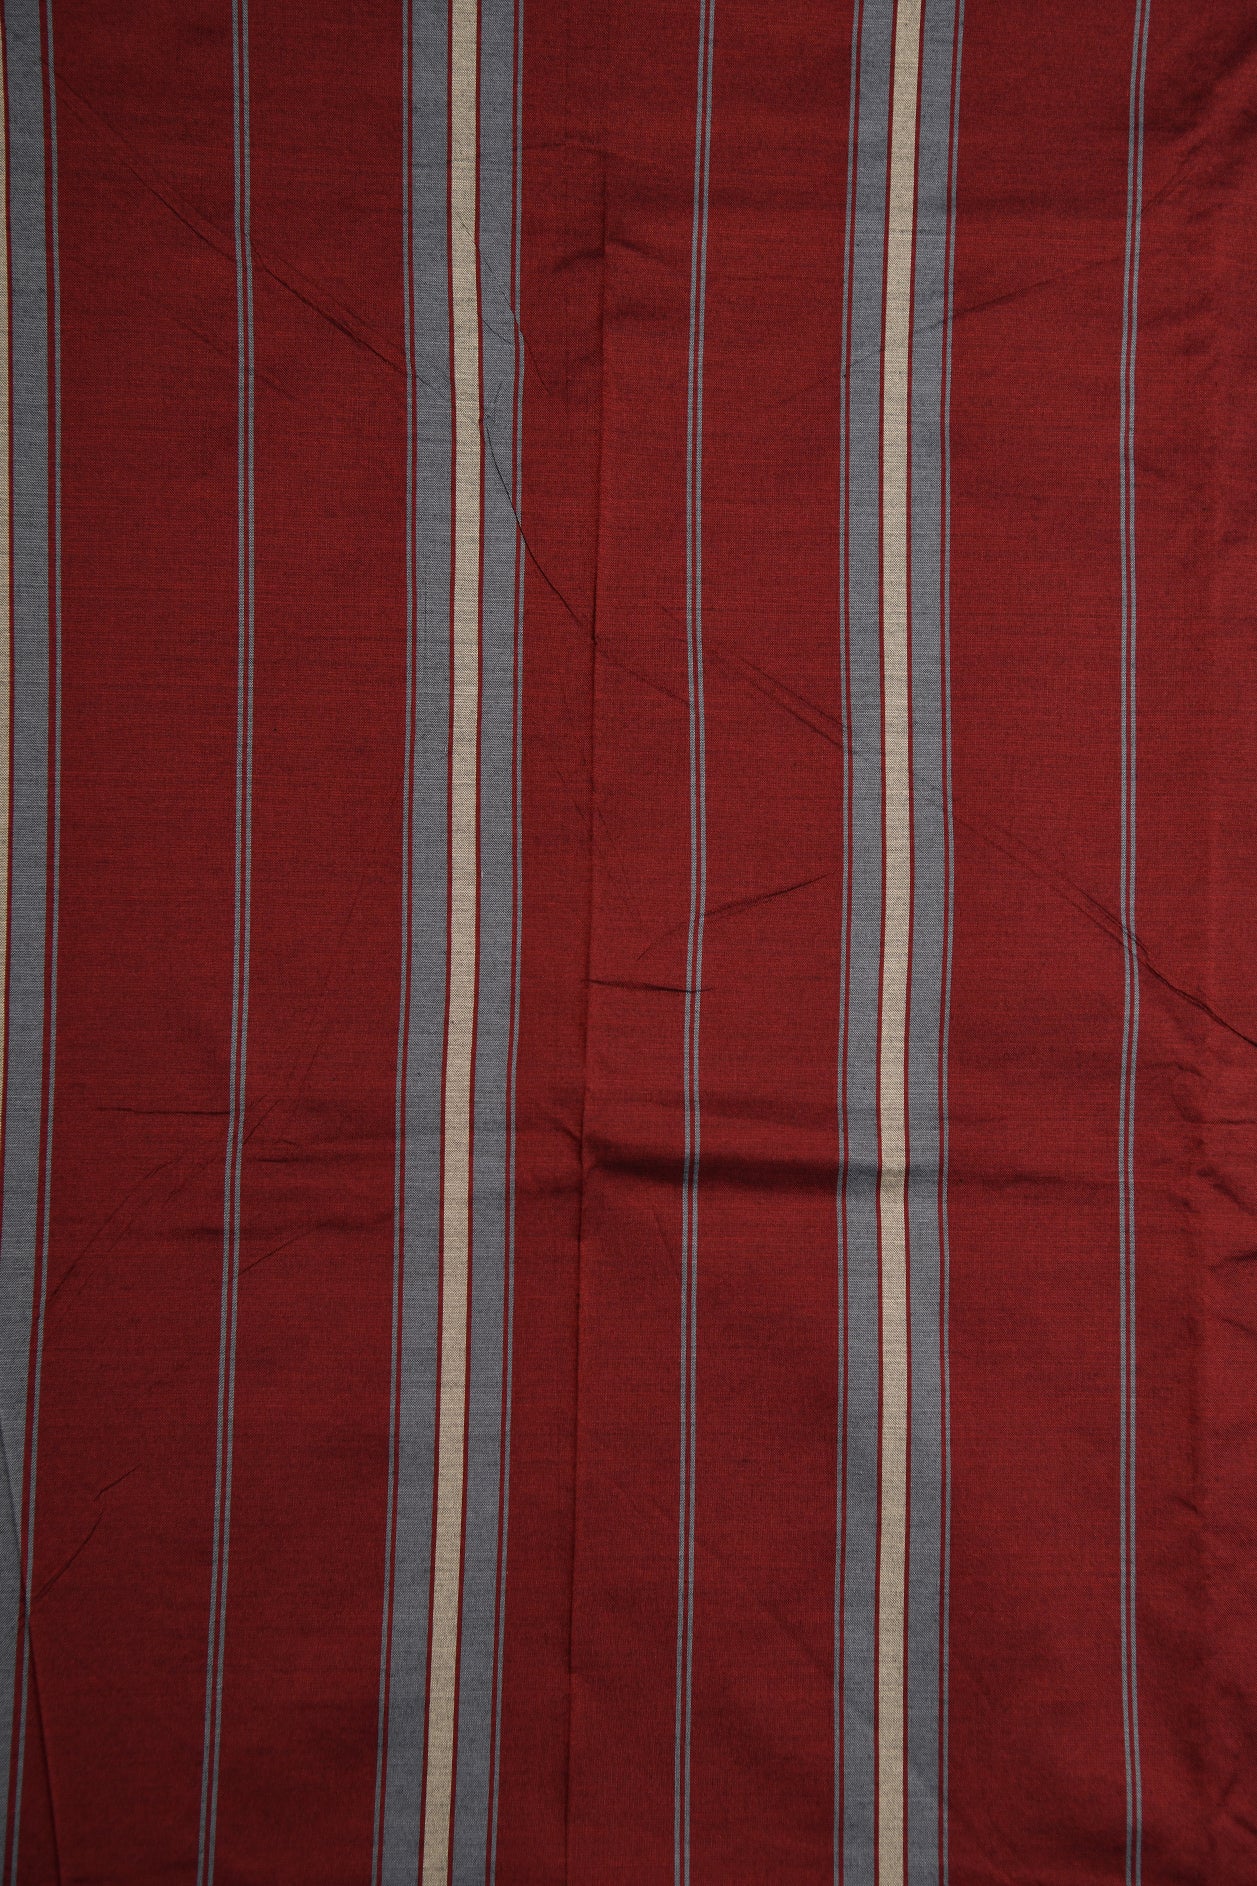 Thread Work Rudraksh Border In Plain Charcoal Grey Dharwad Cotton Saree